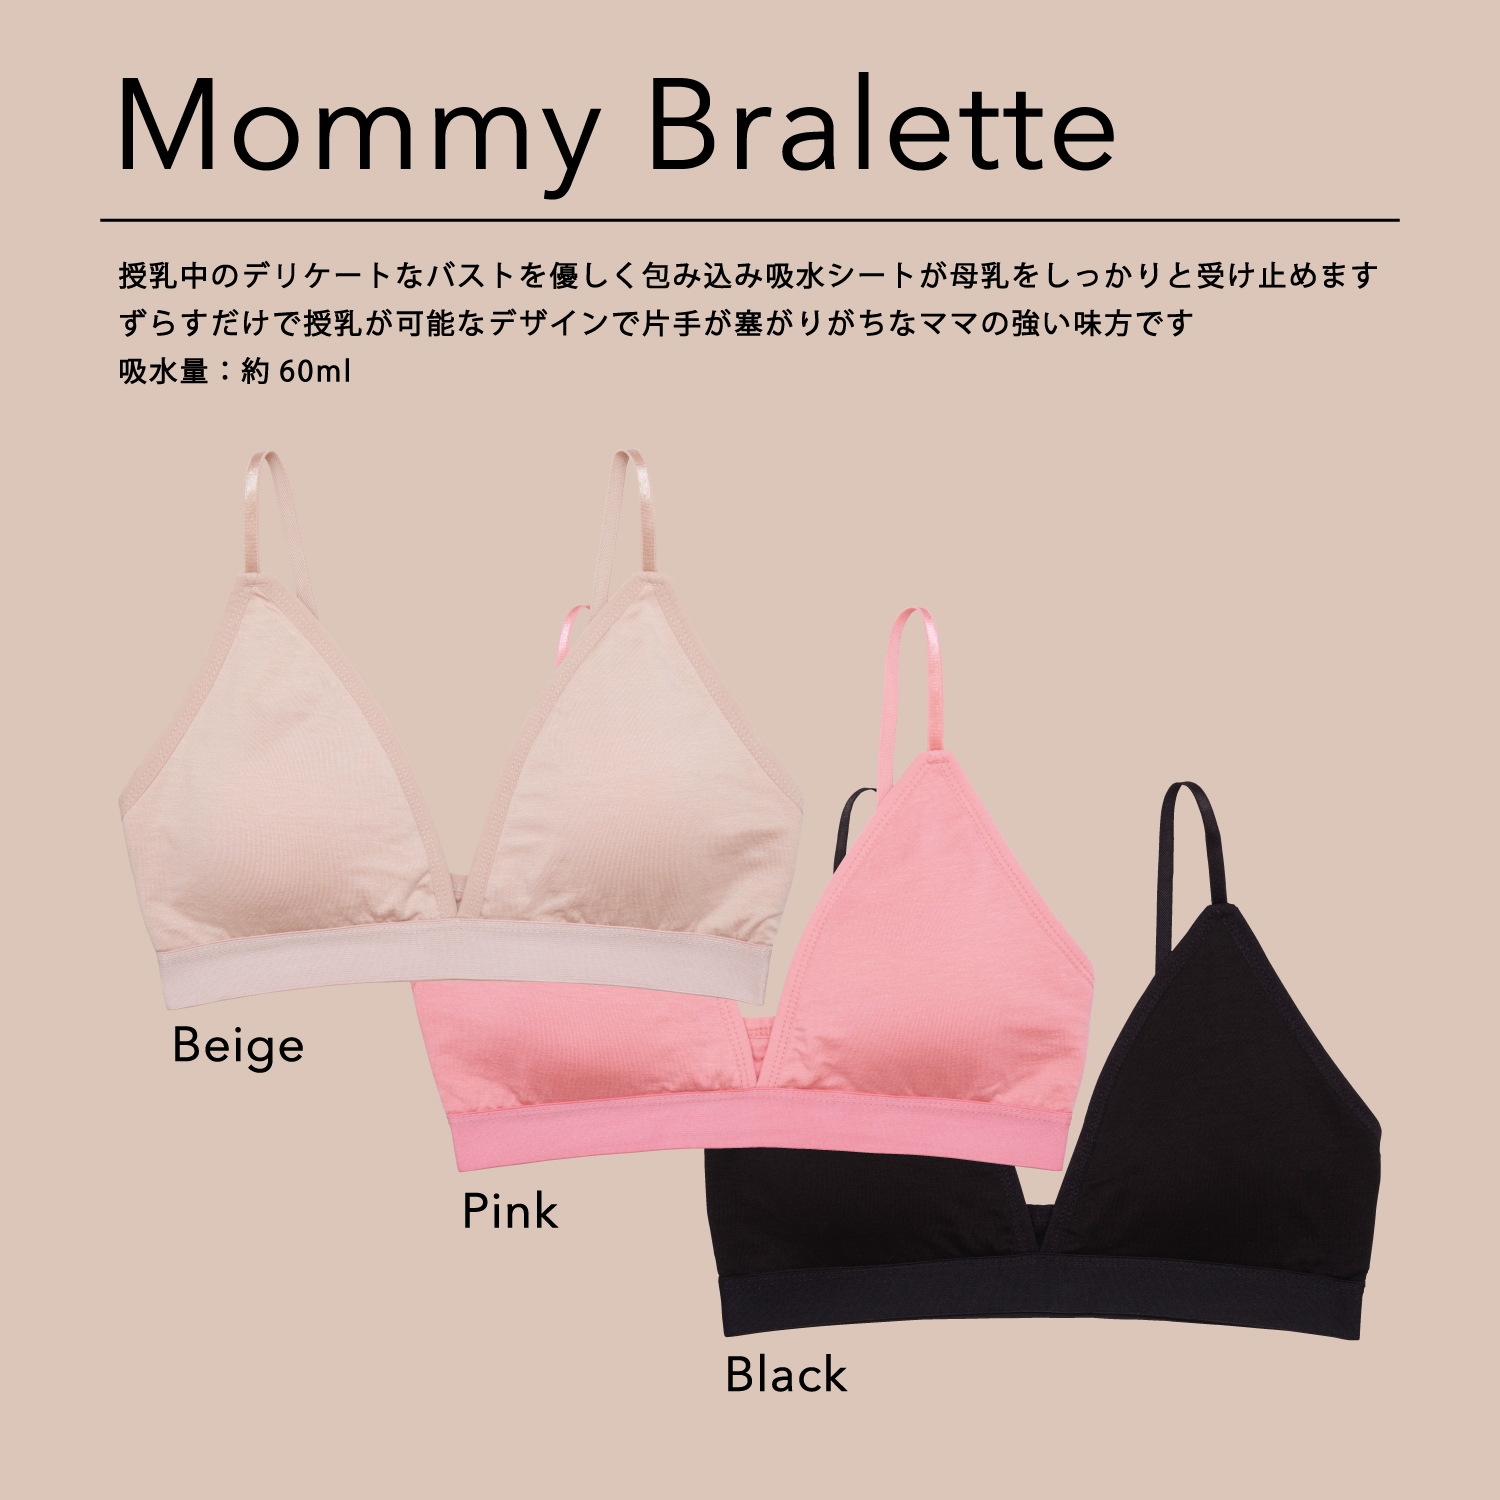 Rine】Mommy Bralette(授乳パッド不要の吸水ブラレット)と吸水ショーツ